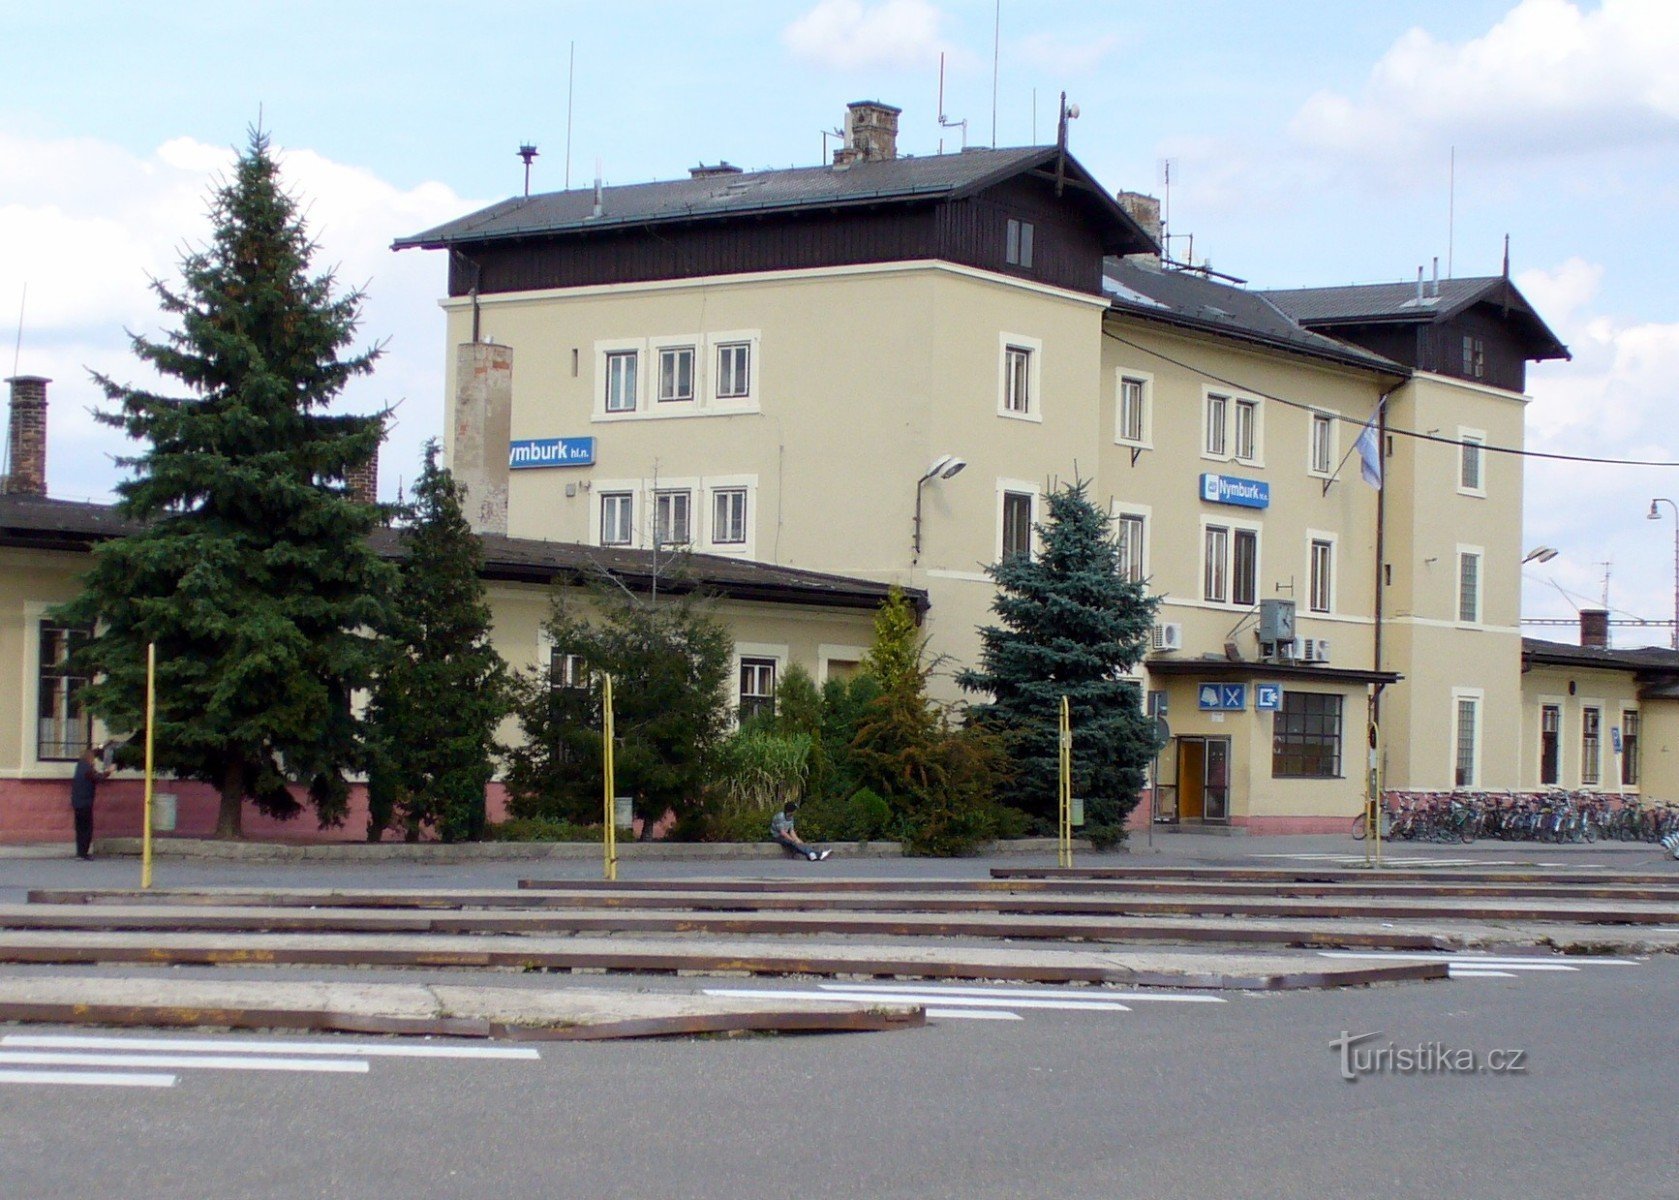 ČD Centraal Station (sinds 1870)